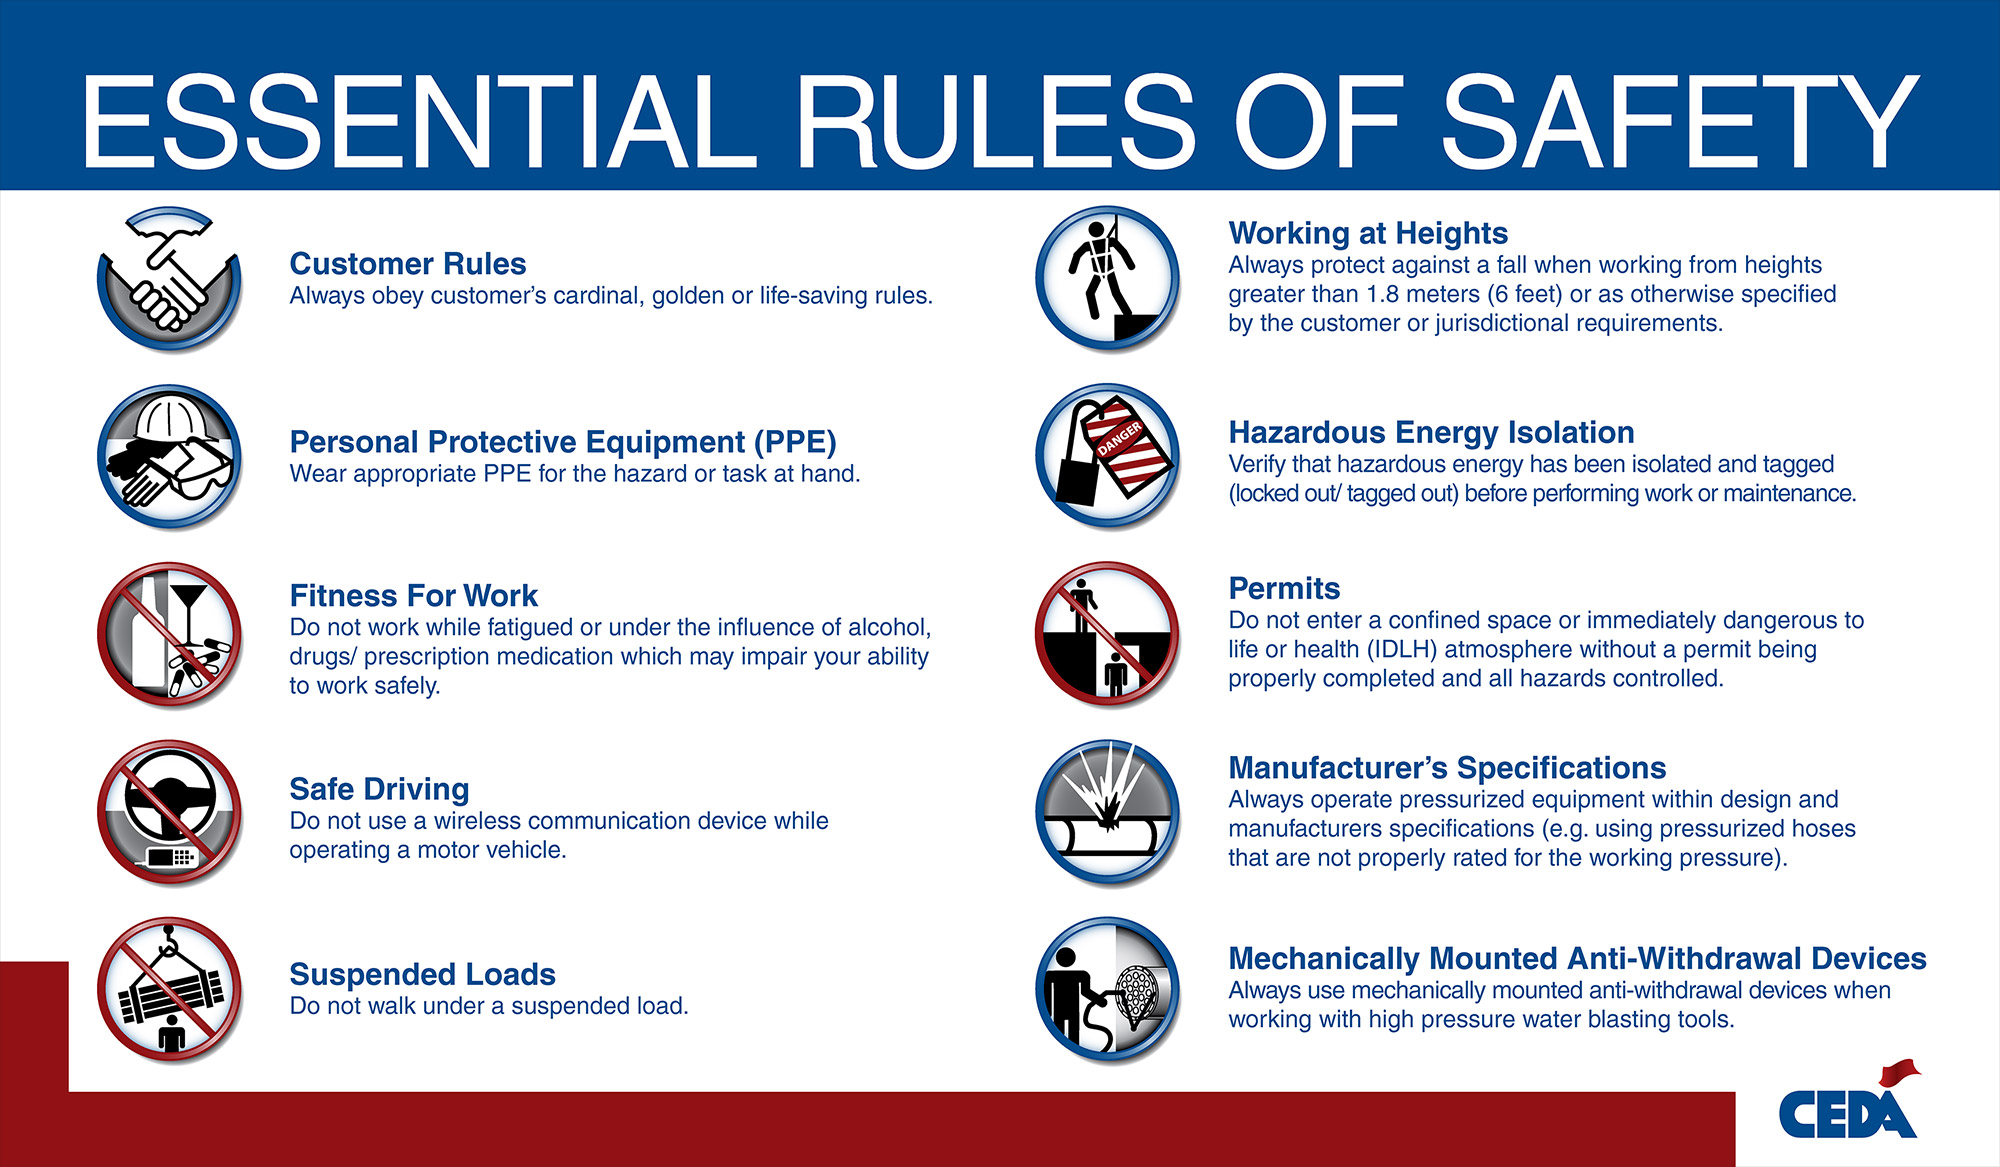 ceda-essential-rules-of-safety.jpg